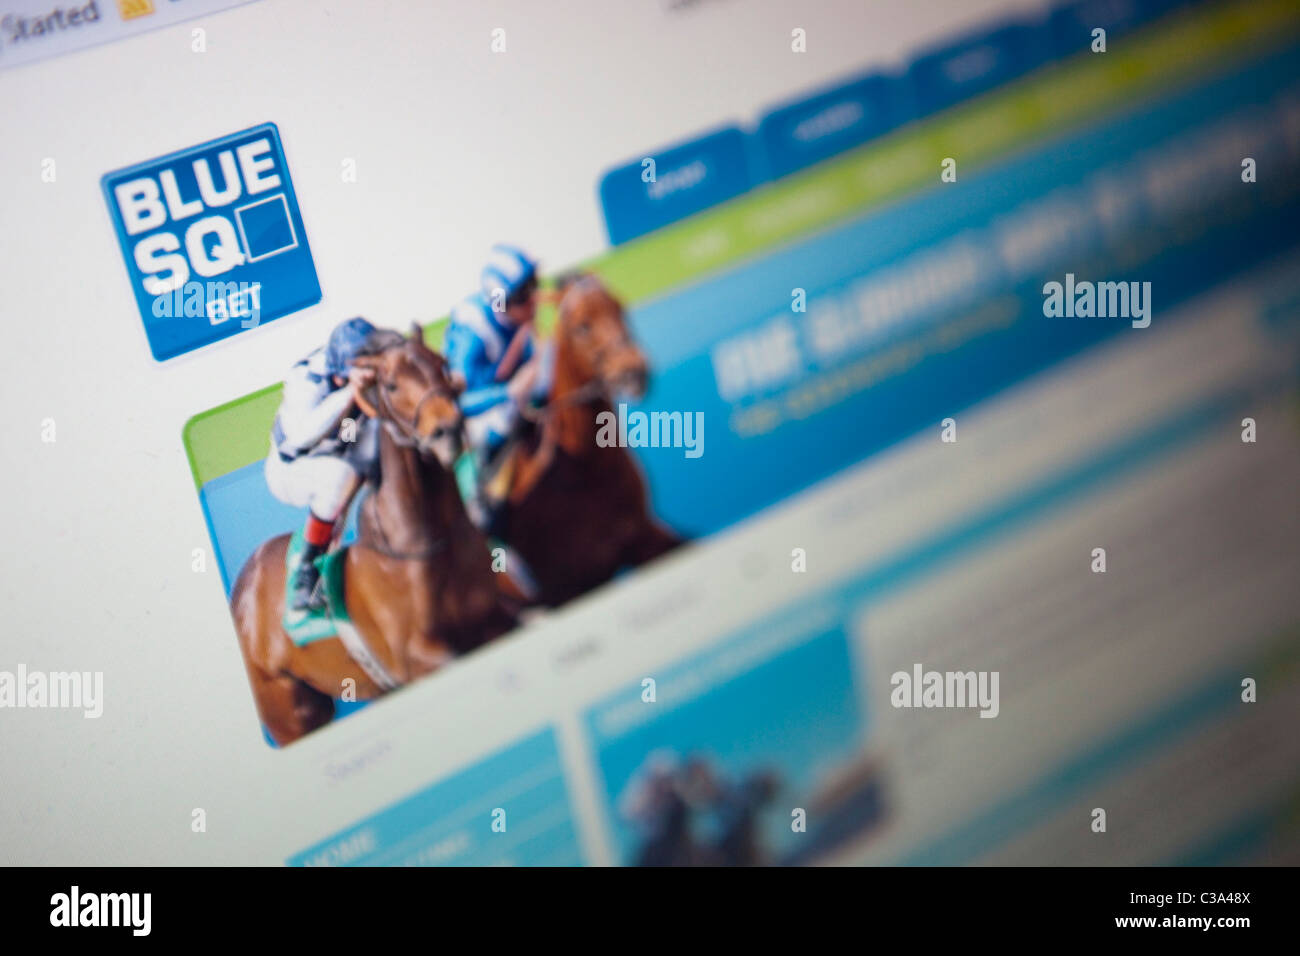 Illustrative image of the Blue SQ website. Stock Photo